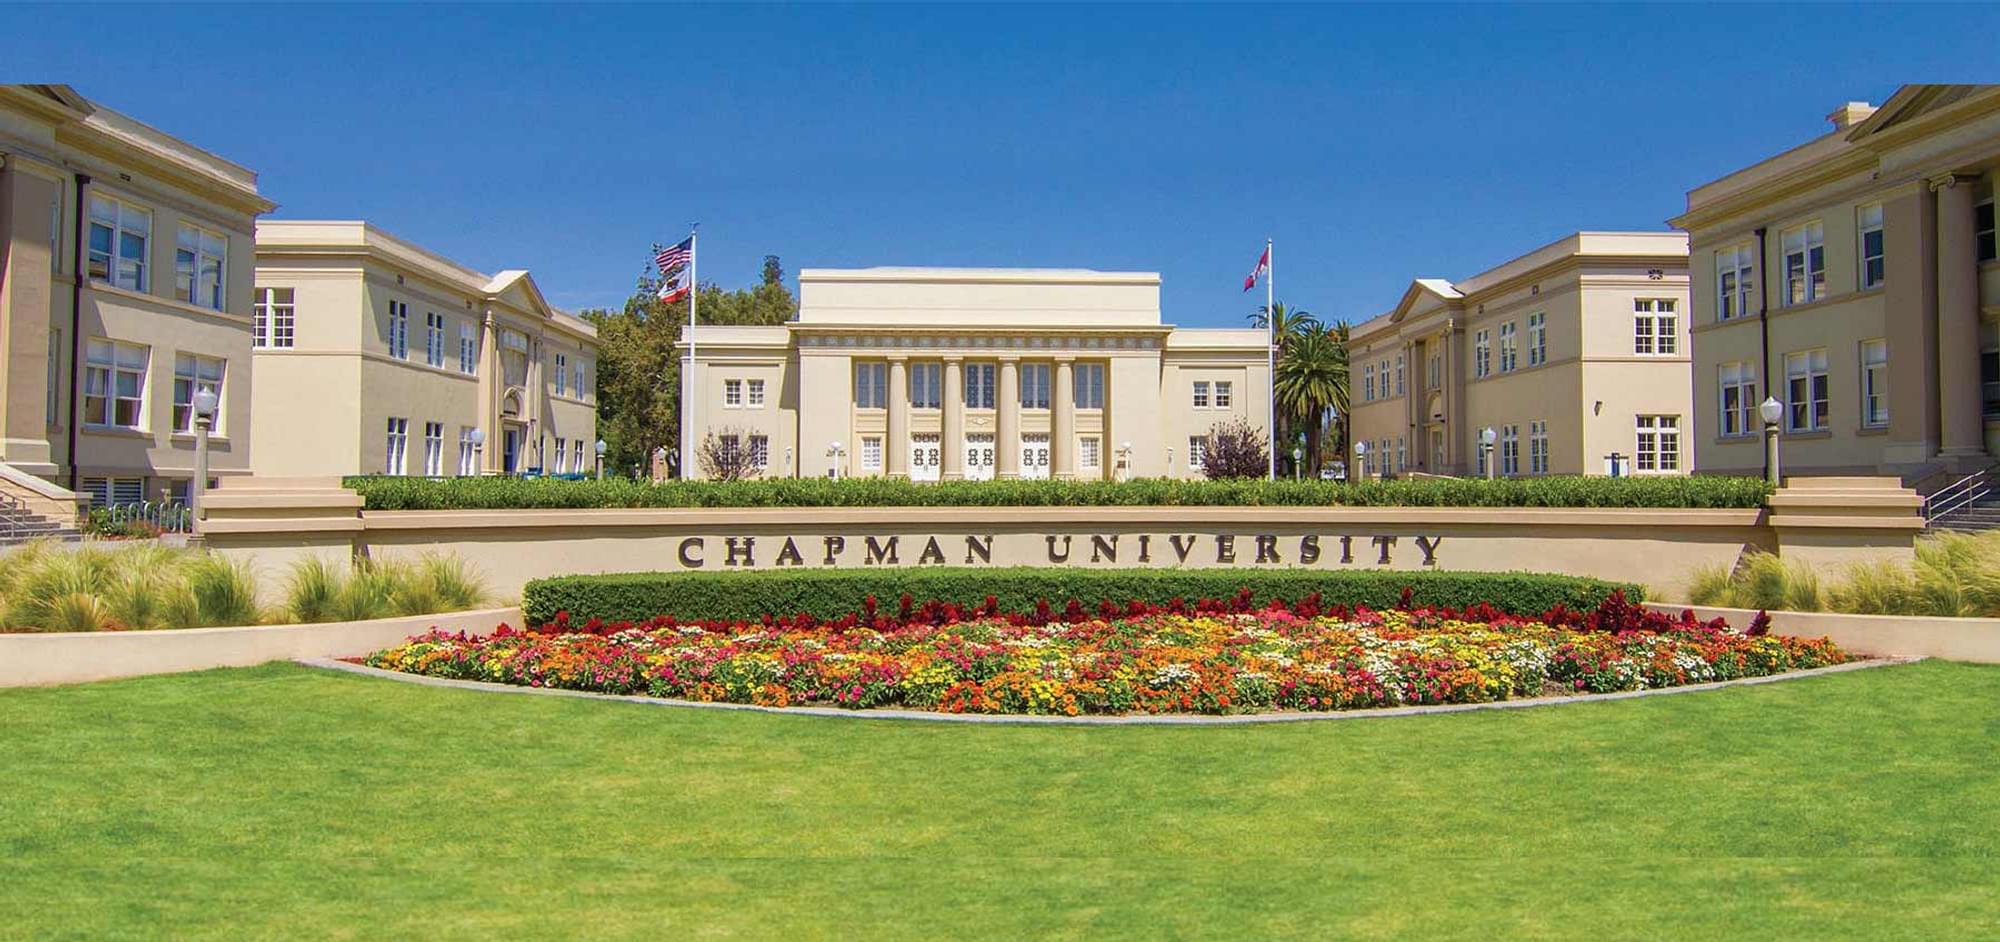 Chapman University Ranking CollegeLearners com